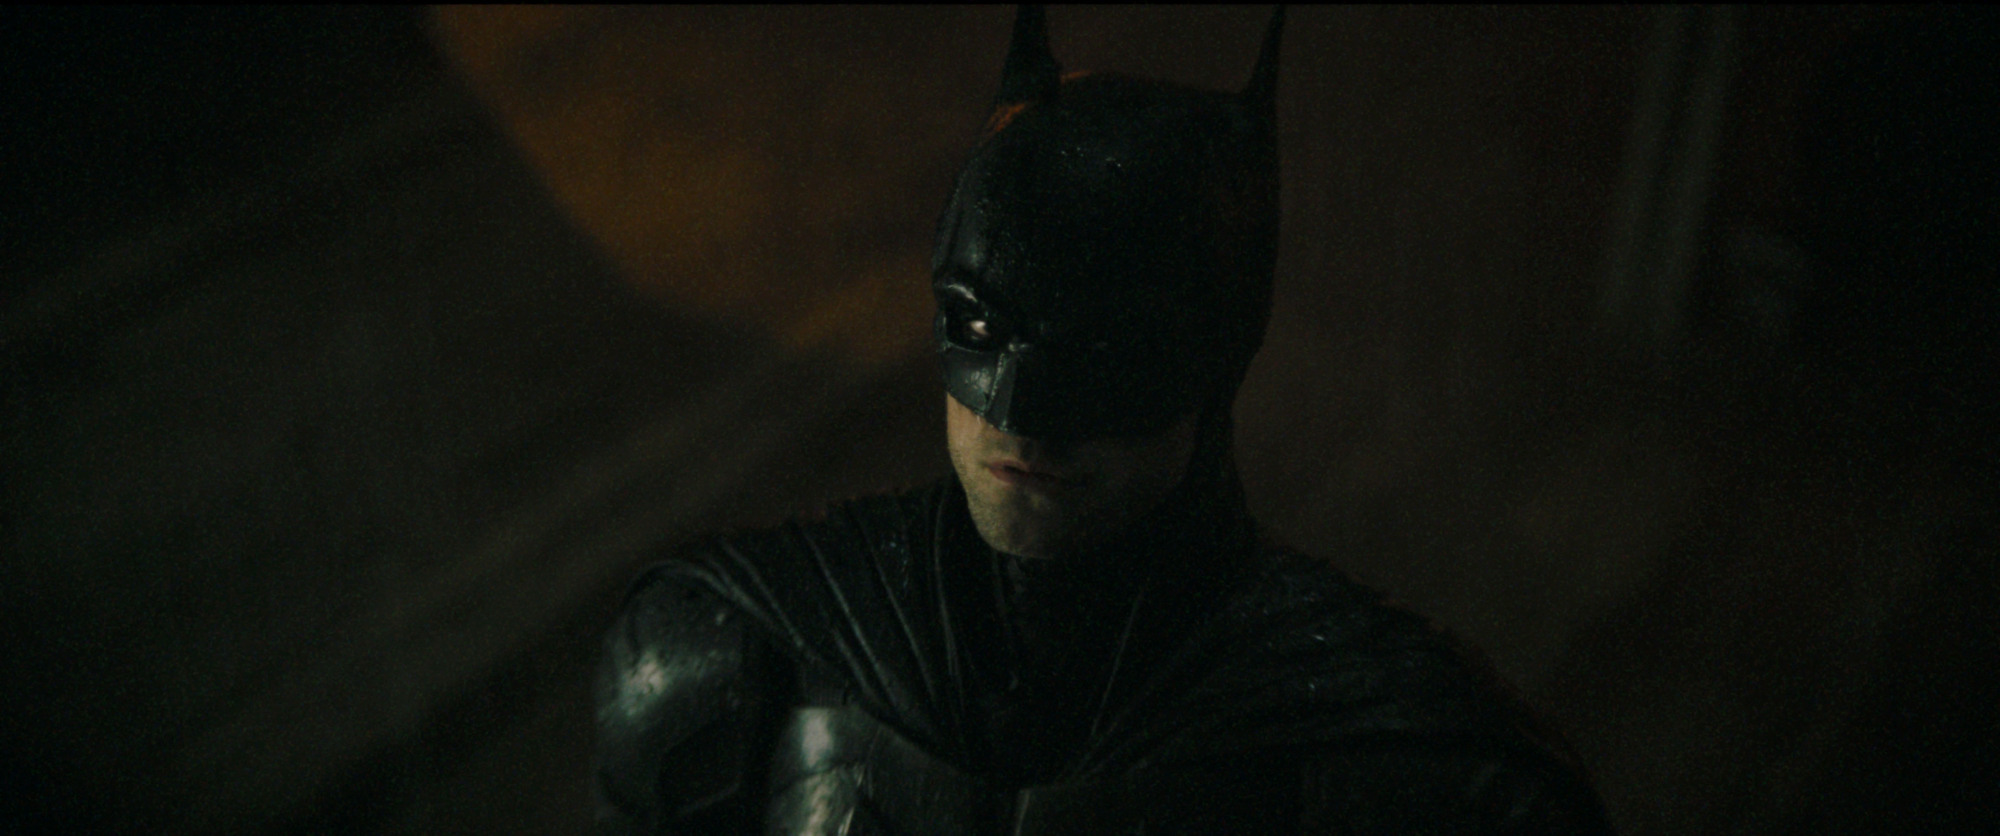 "I'm vengeance." Robert Pattinson's bulletproof Batsuit is on full display here.